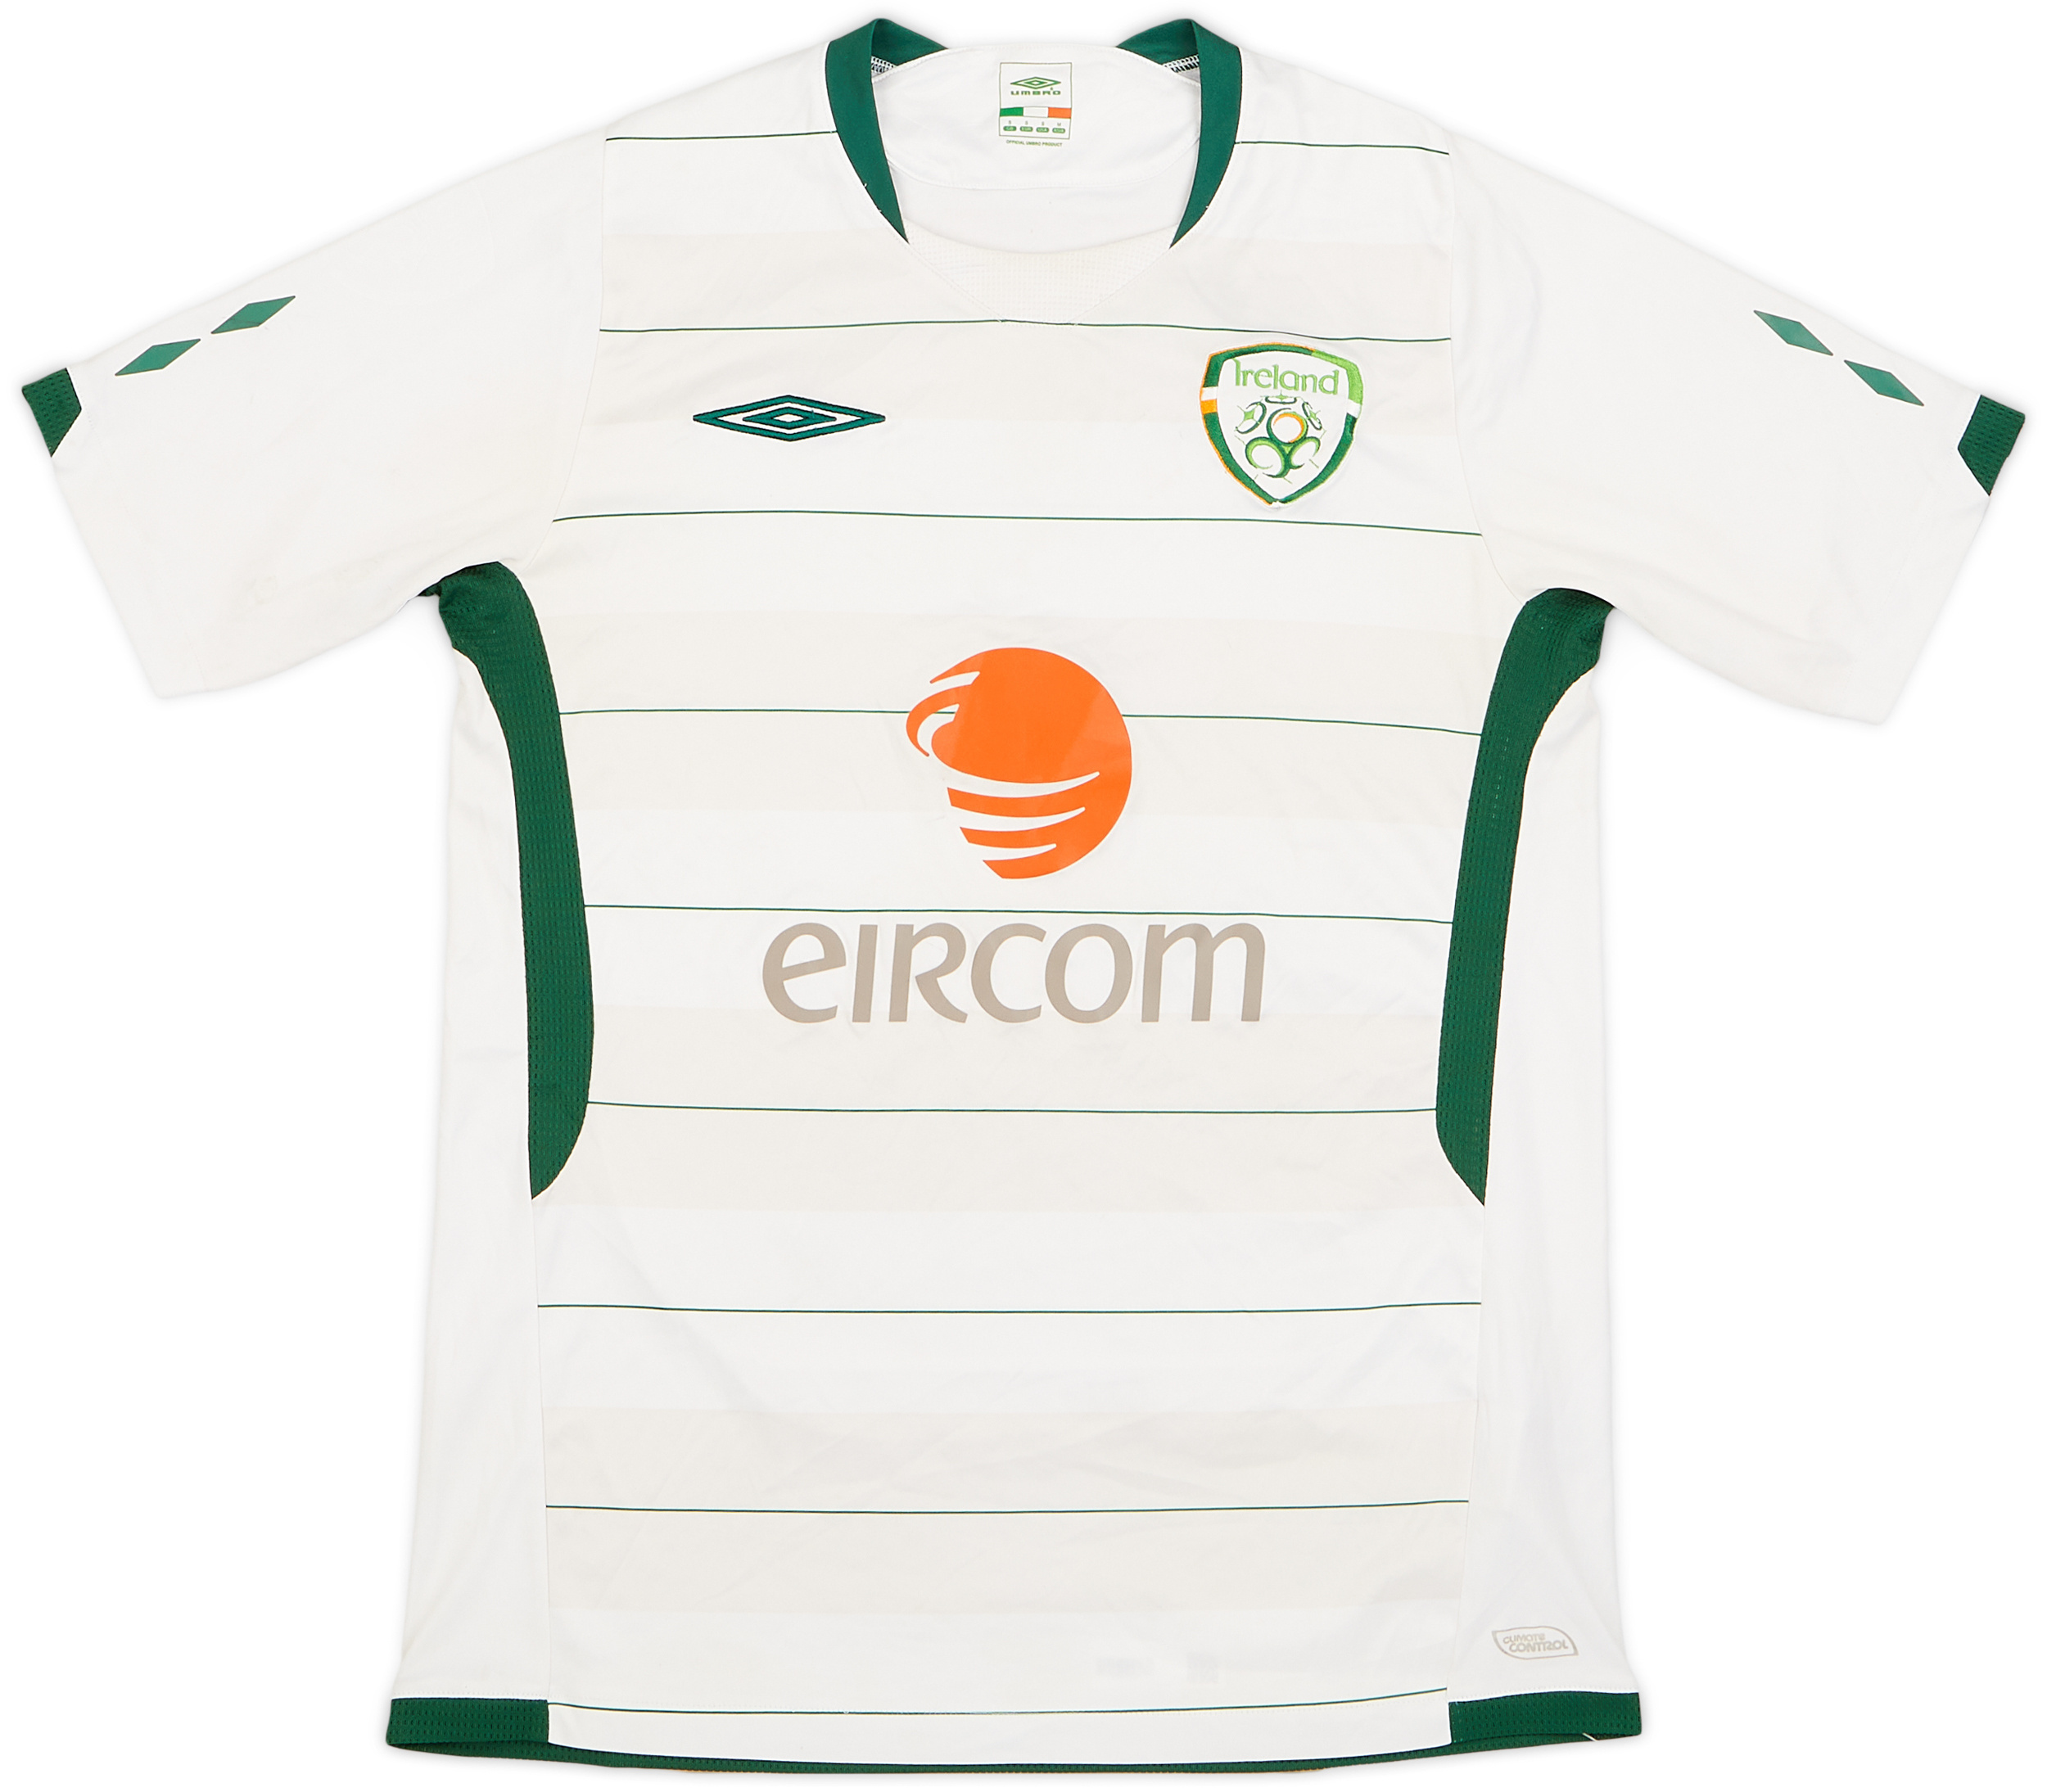 2009-10 Republic of Ireland Away Shirt - 7/10 - ()